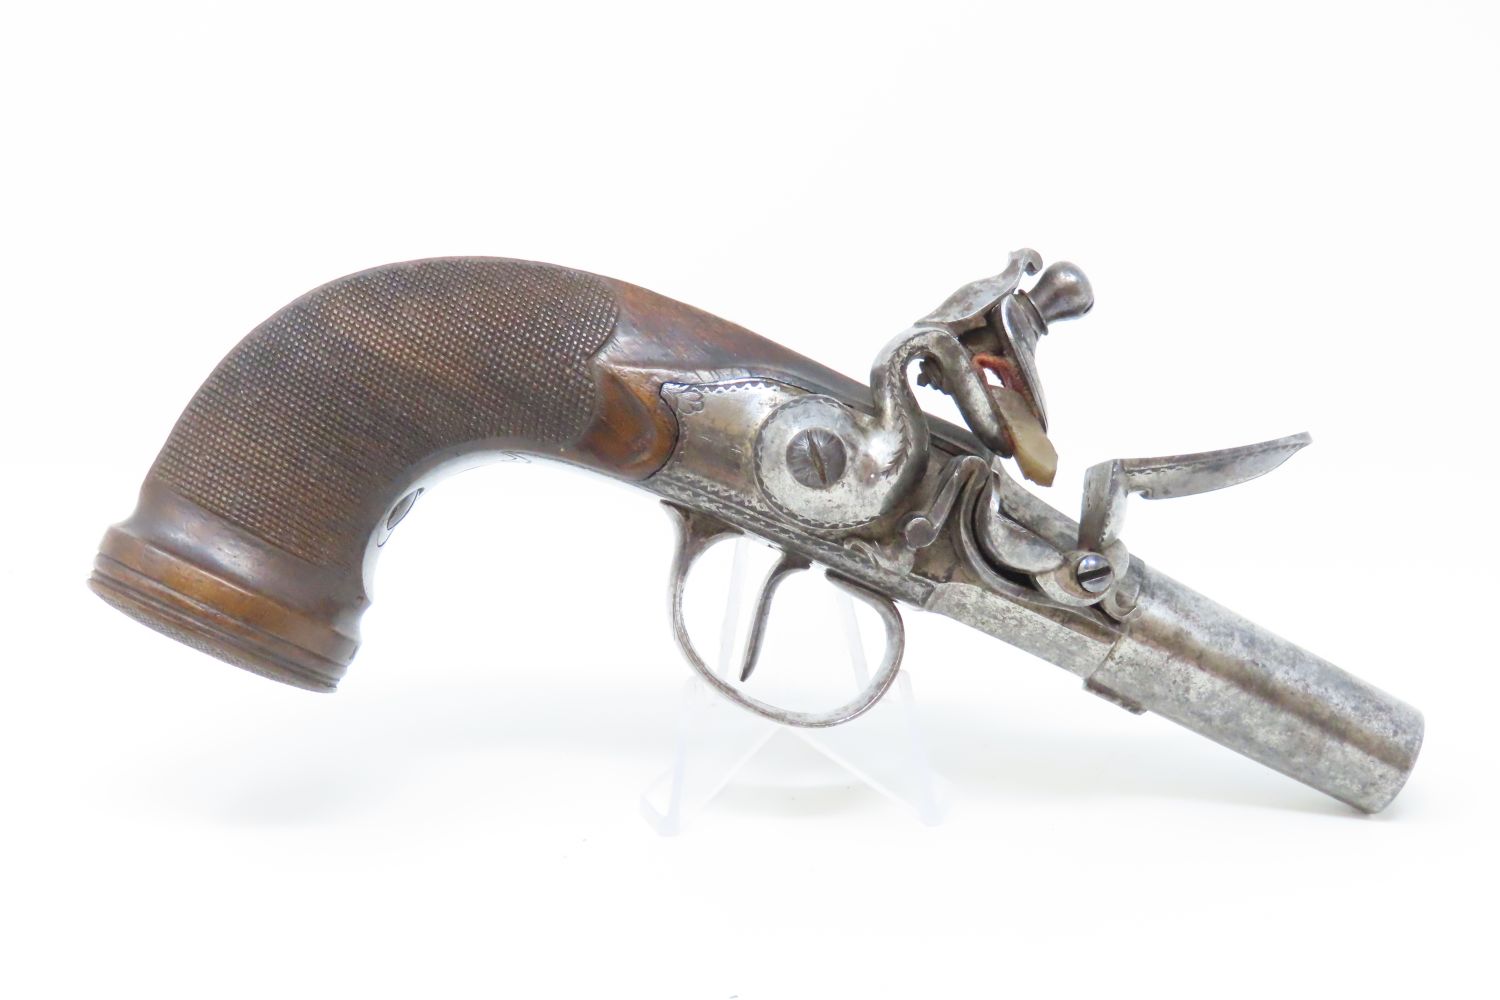 Queen Anne Style Flintlock Pistol with Accessories 3.8.21 C&R